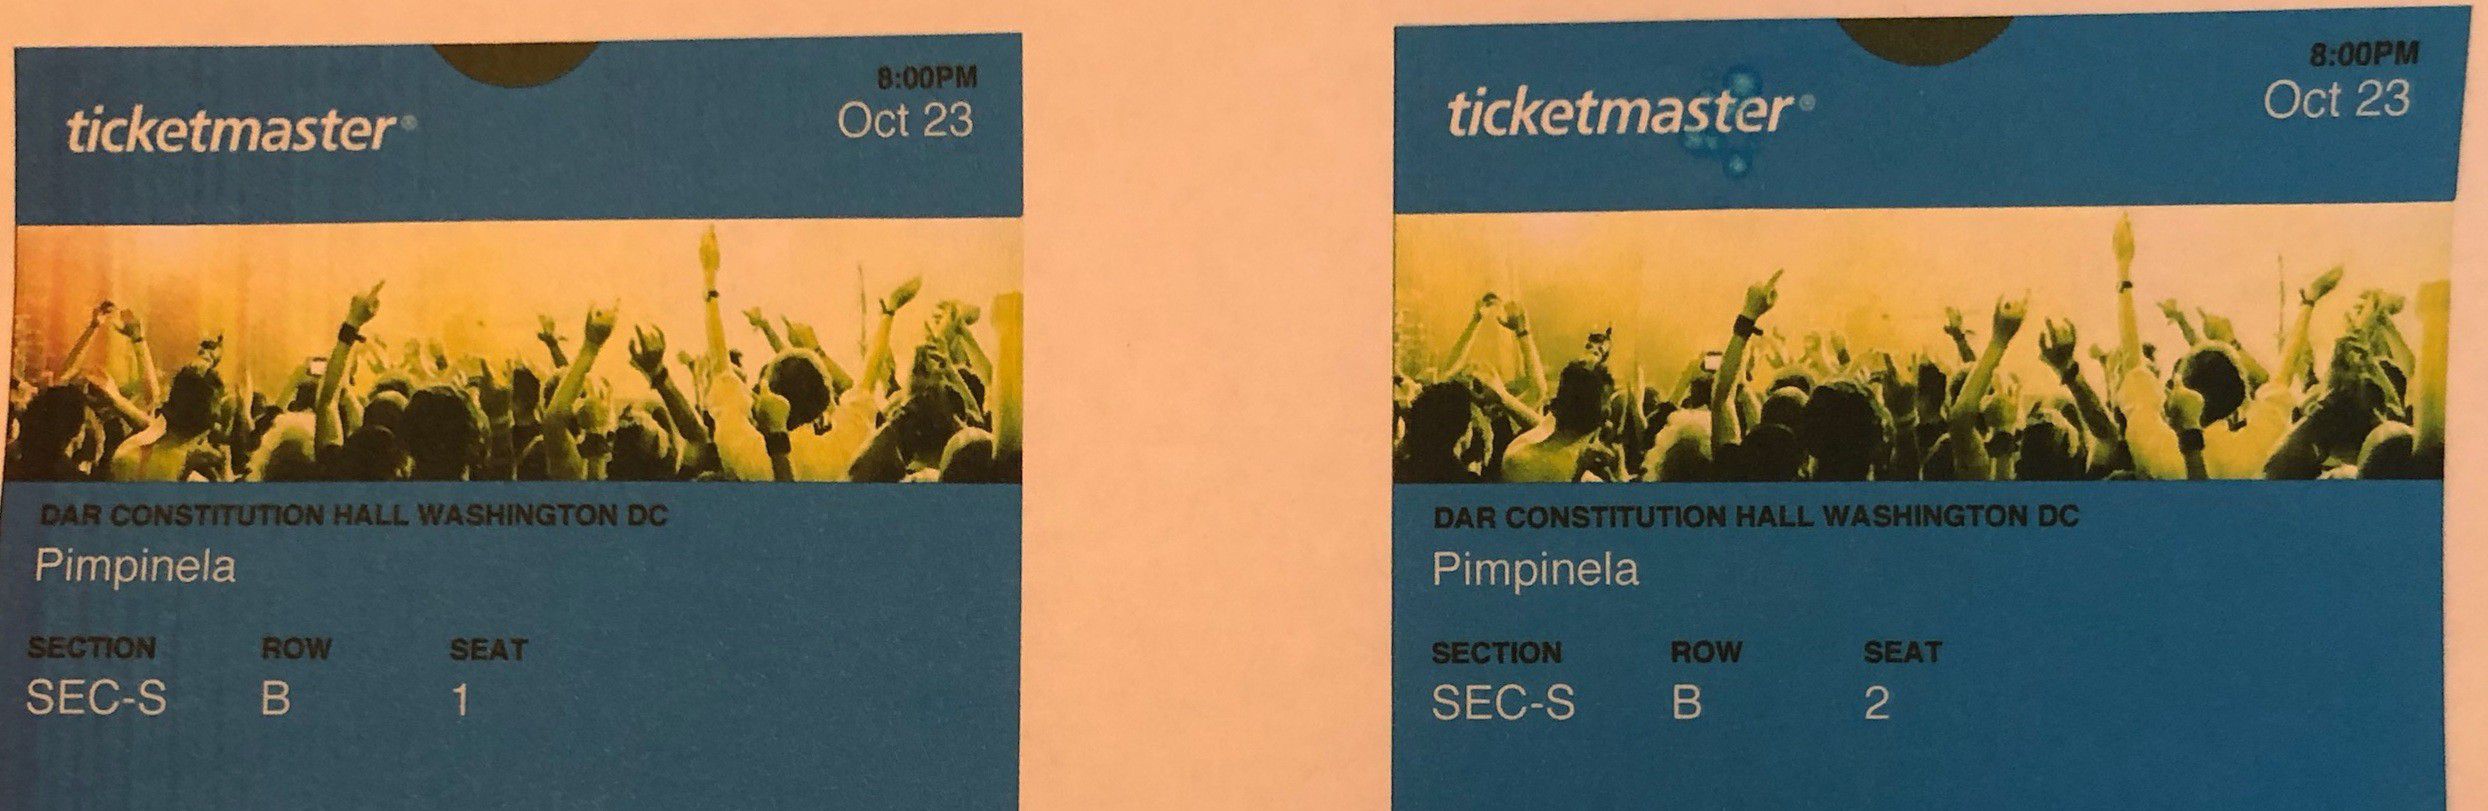 Pimpinela Concert - 2 Tickets Great Seats DAR Constitution Hall Oct 23 